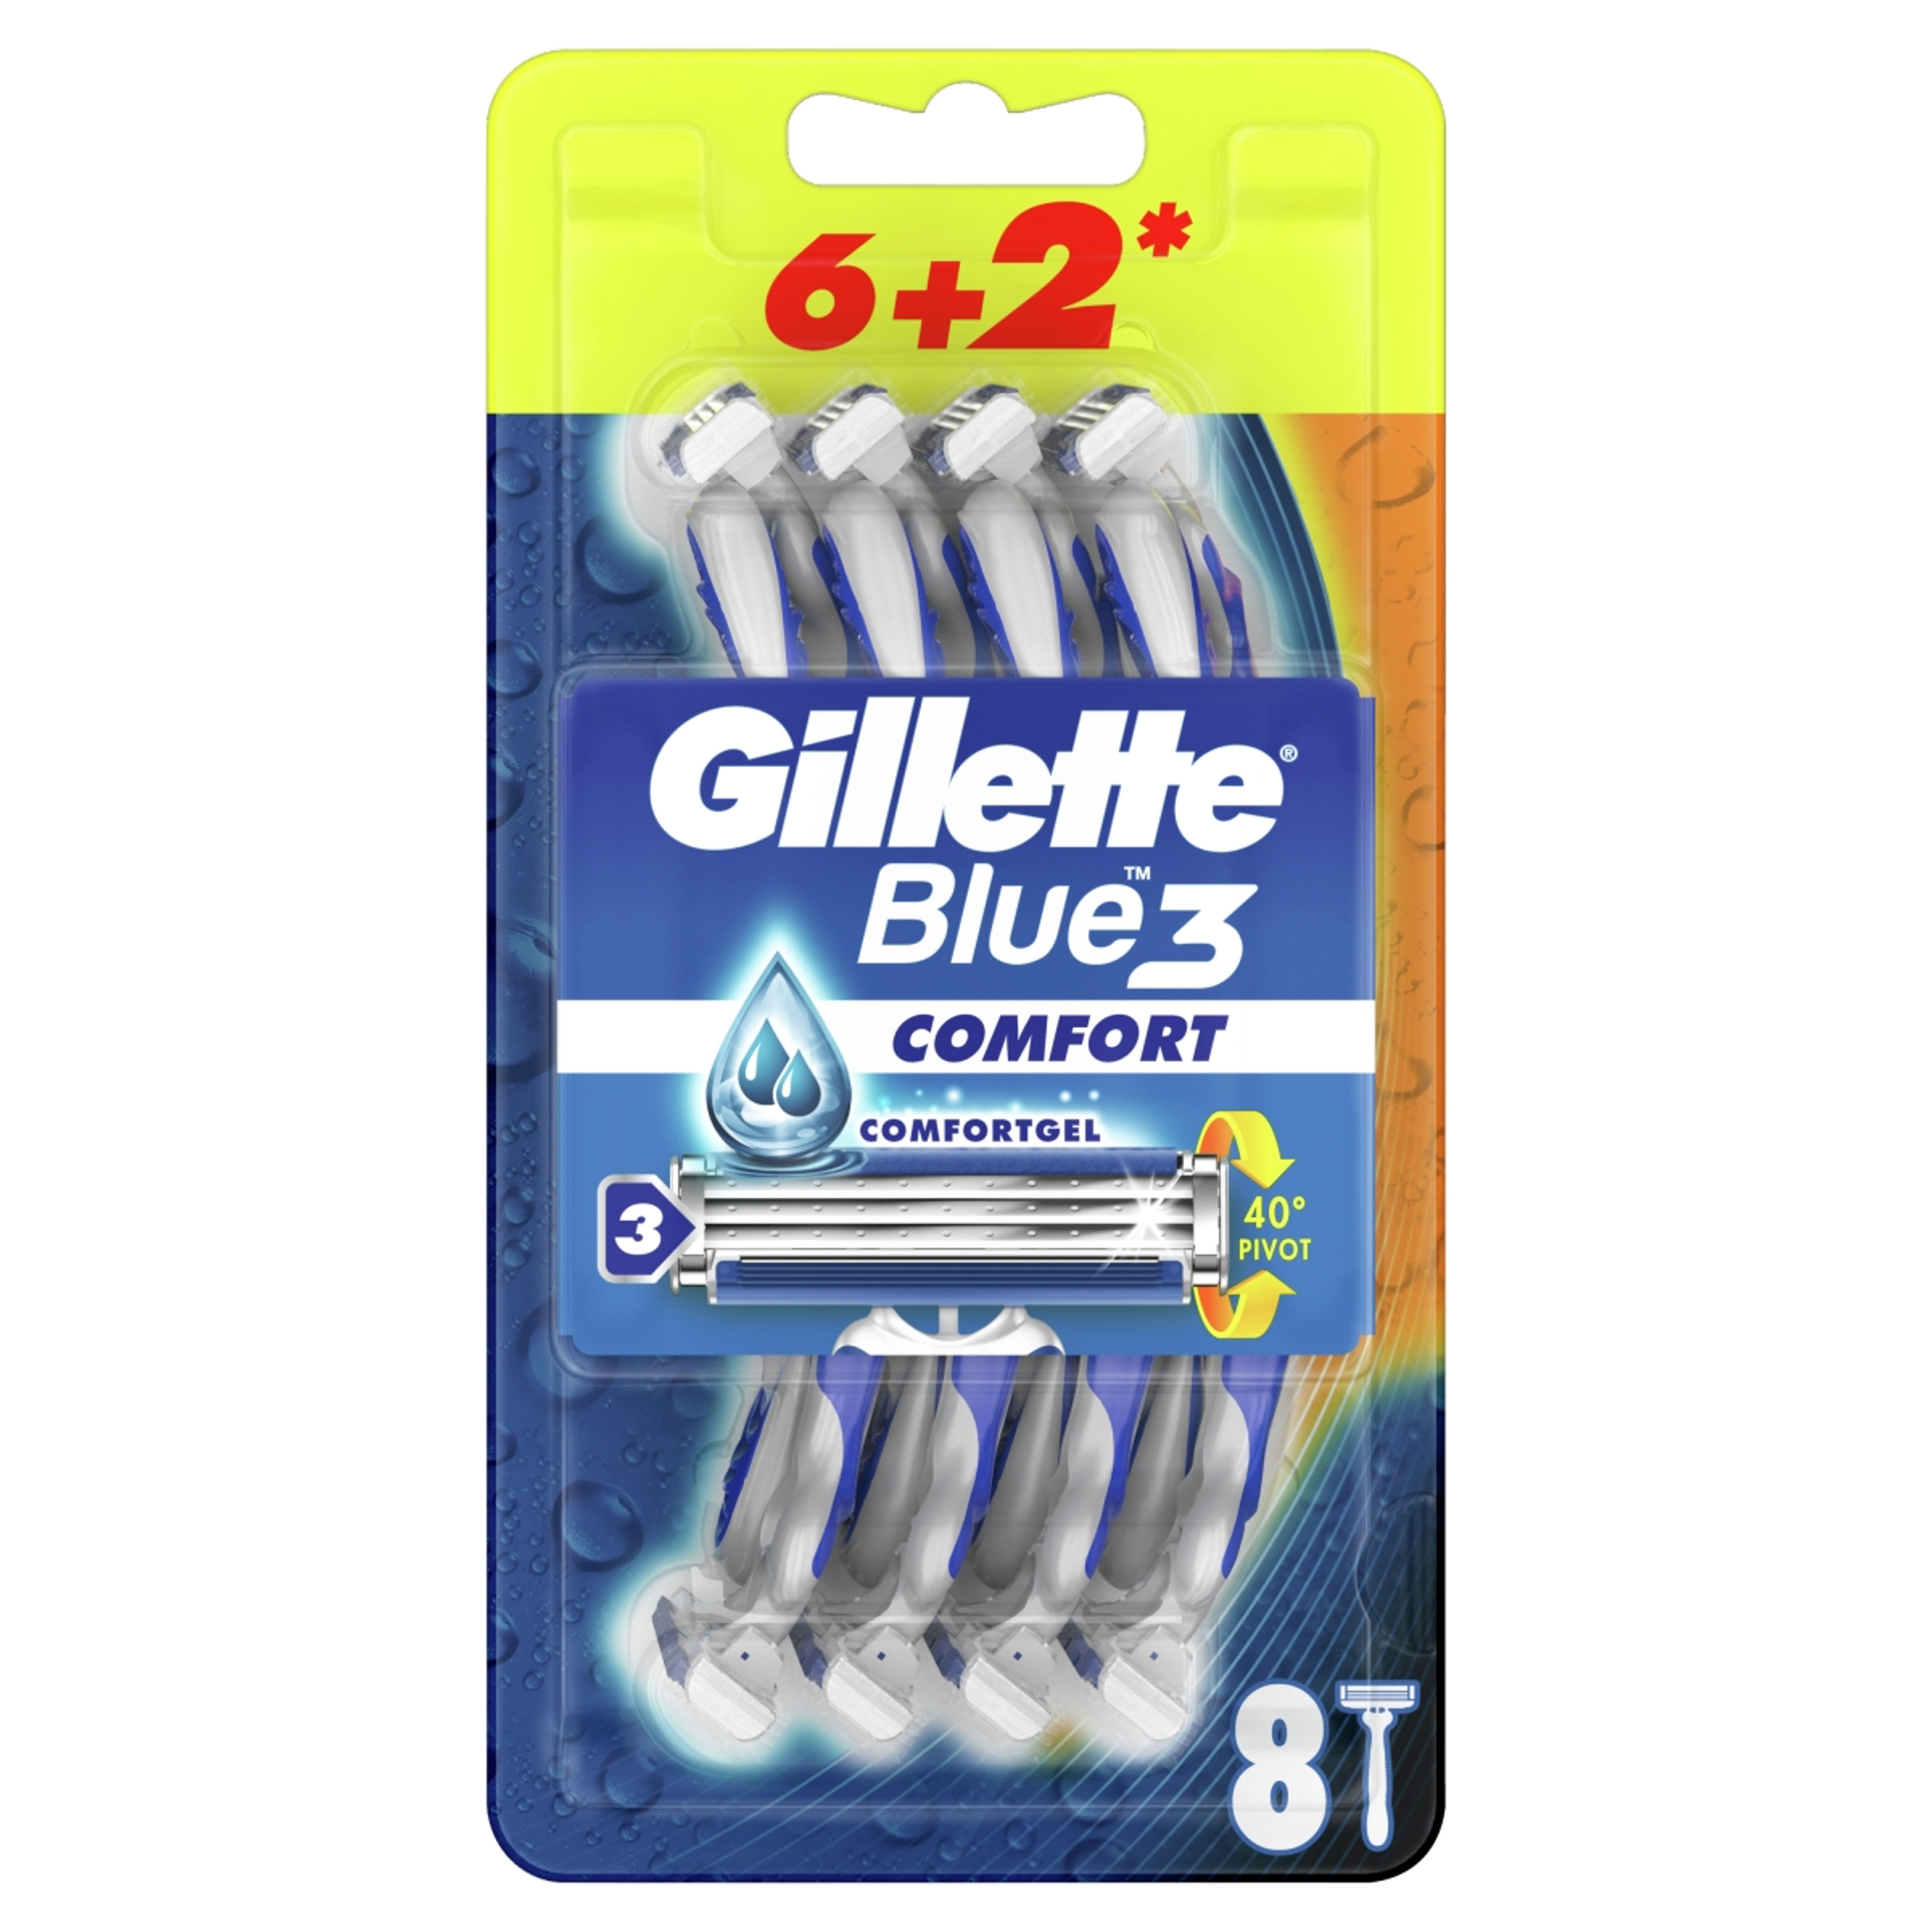 Gillette Blue 3 eldobható borotva - 8 db-1